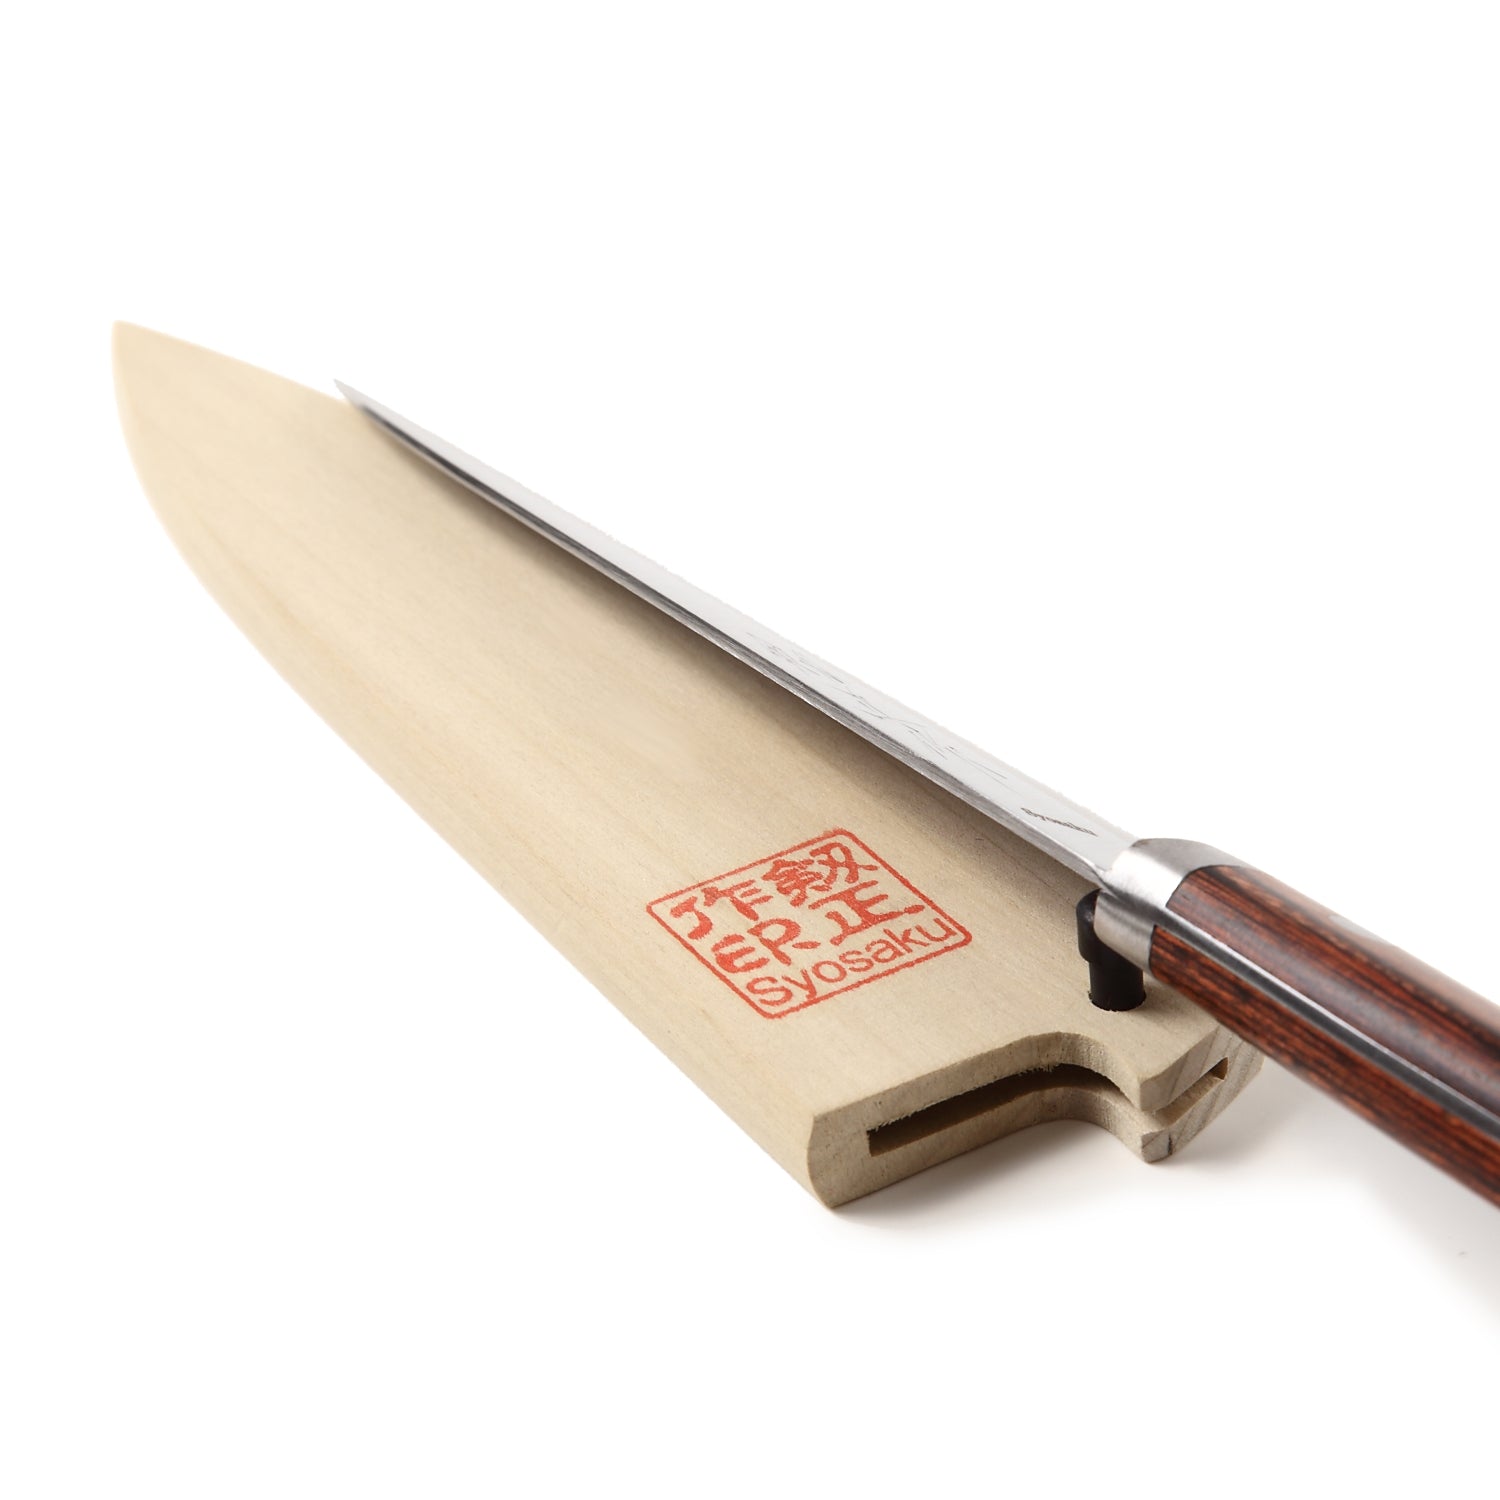 Syosaku Japanese Petty Knife VG-1 Gold Stainless Steel Mahogany Handle, 5.3-Inch (135mm)